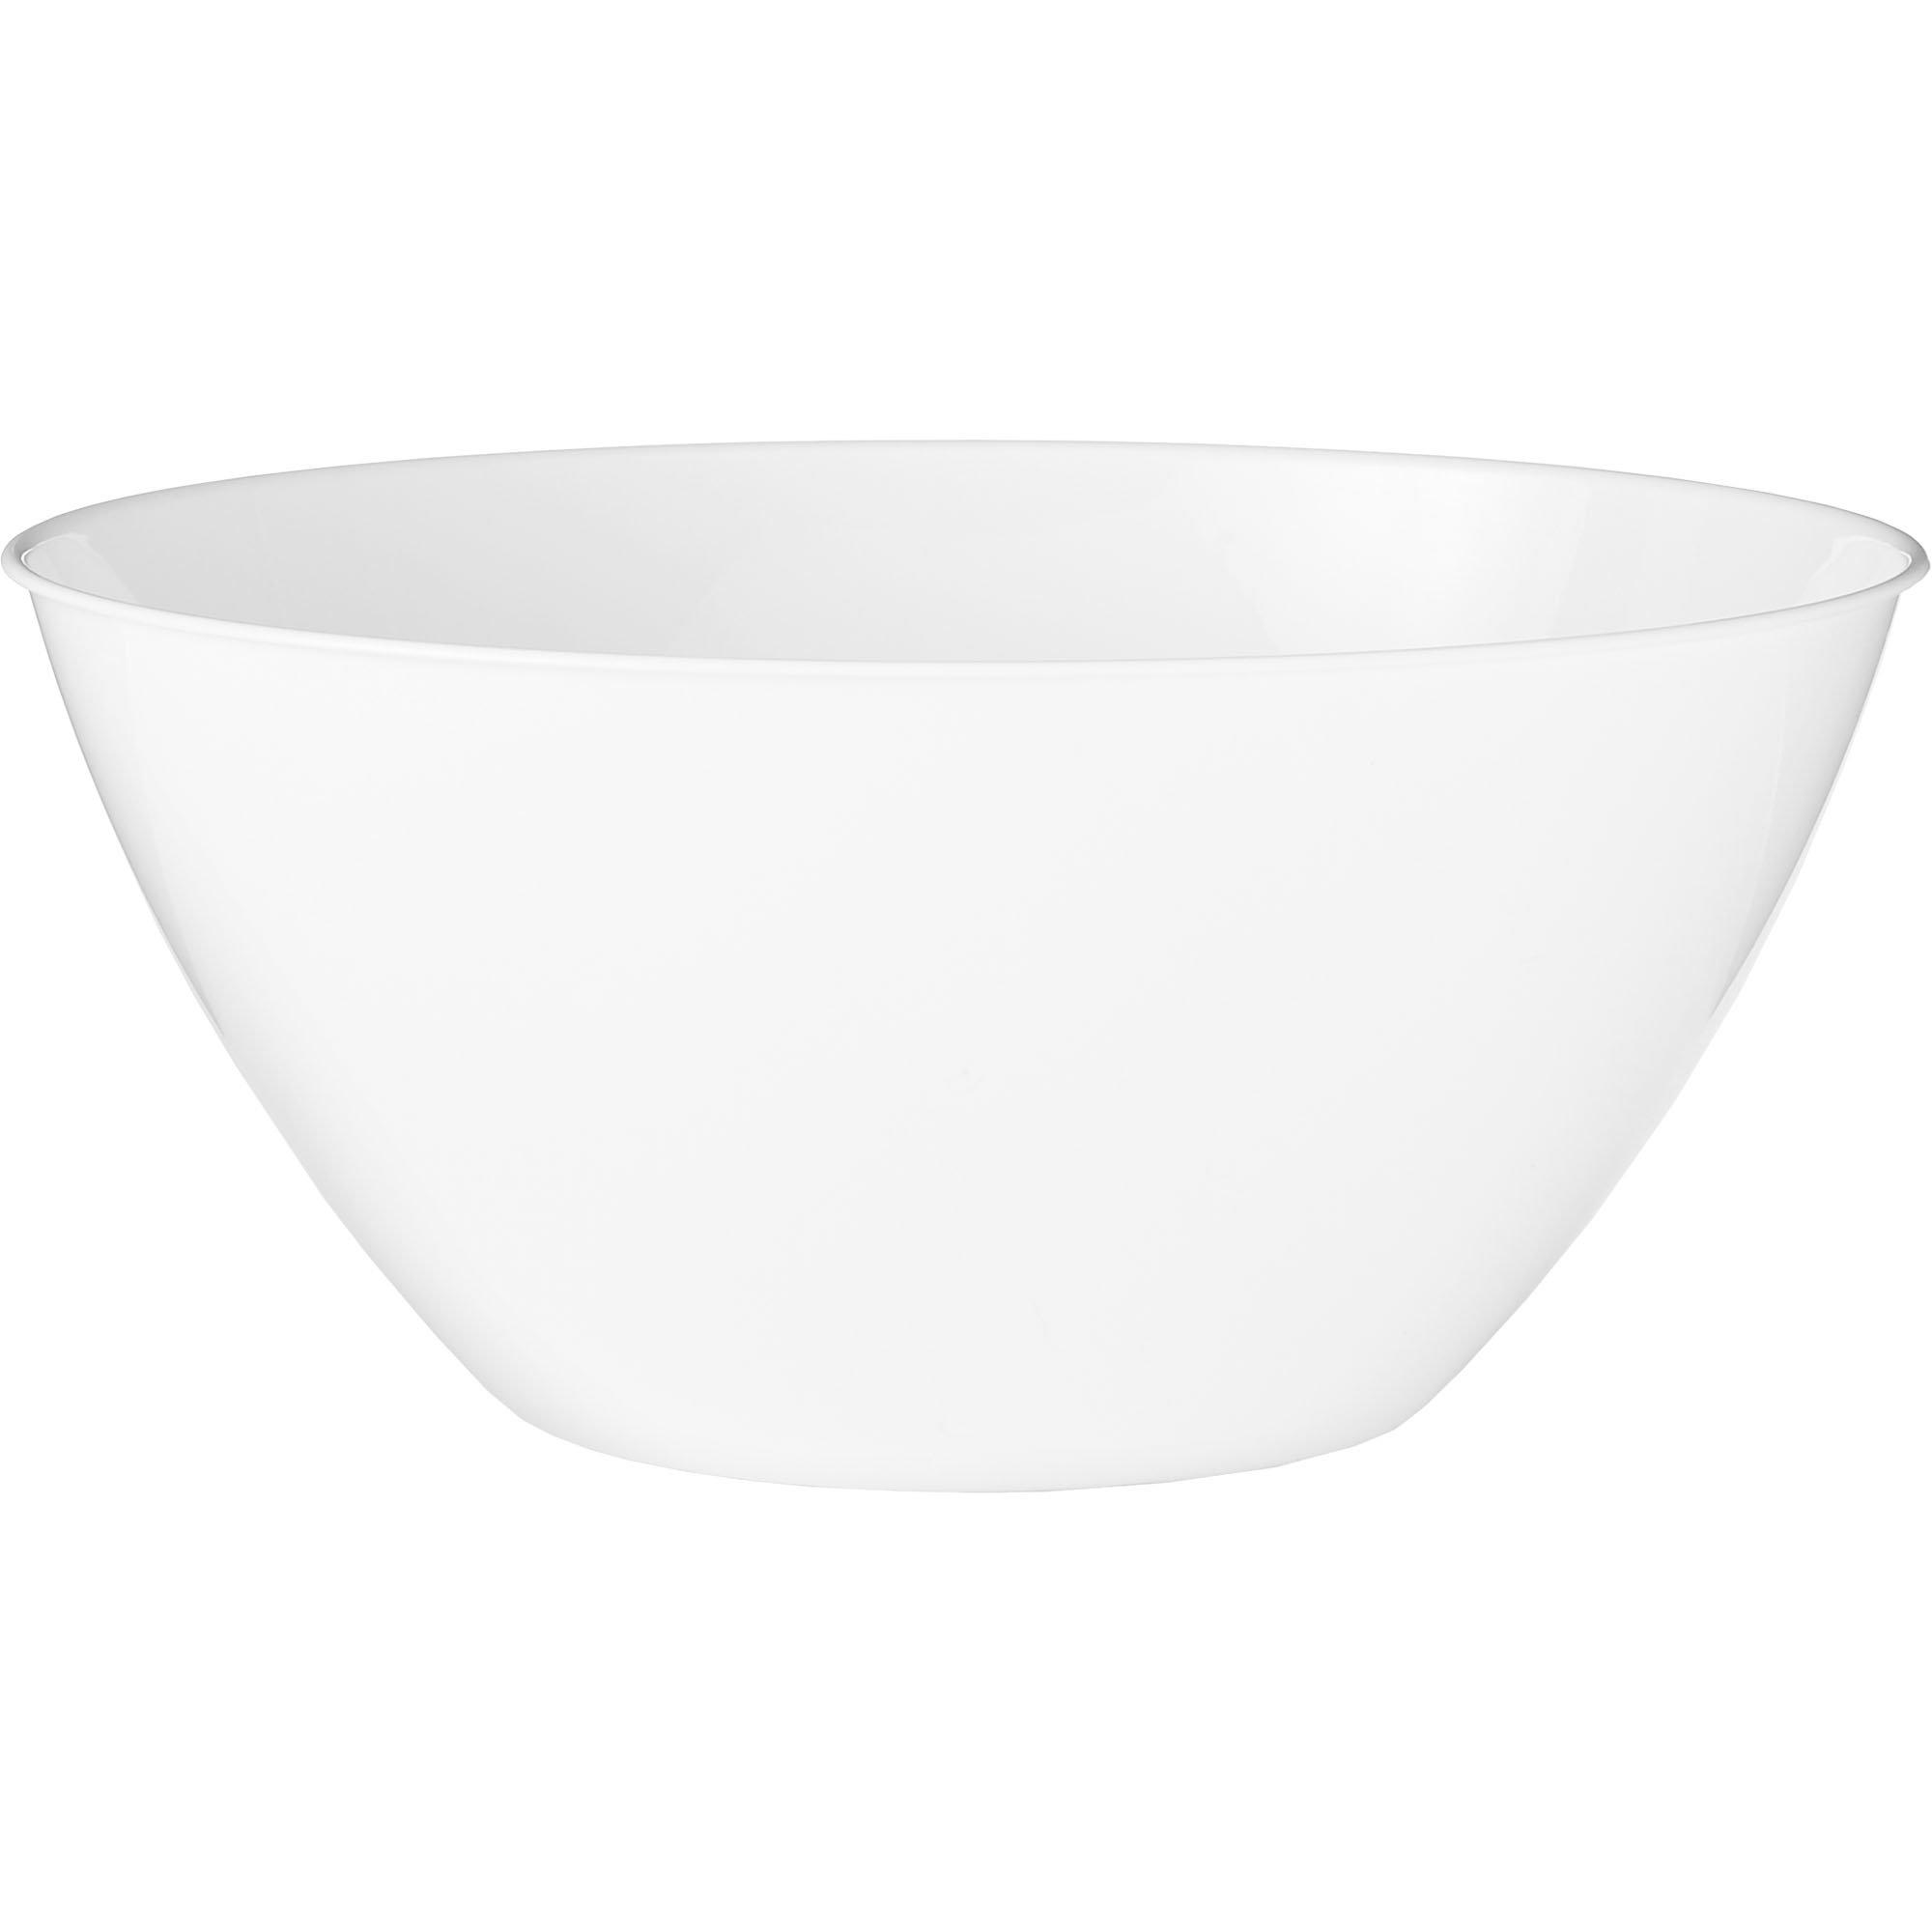 Large Plastic Bowl, 11in, 5qt